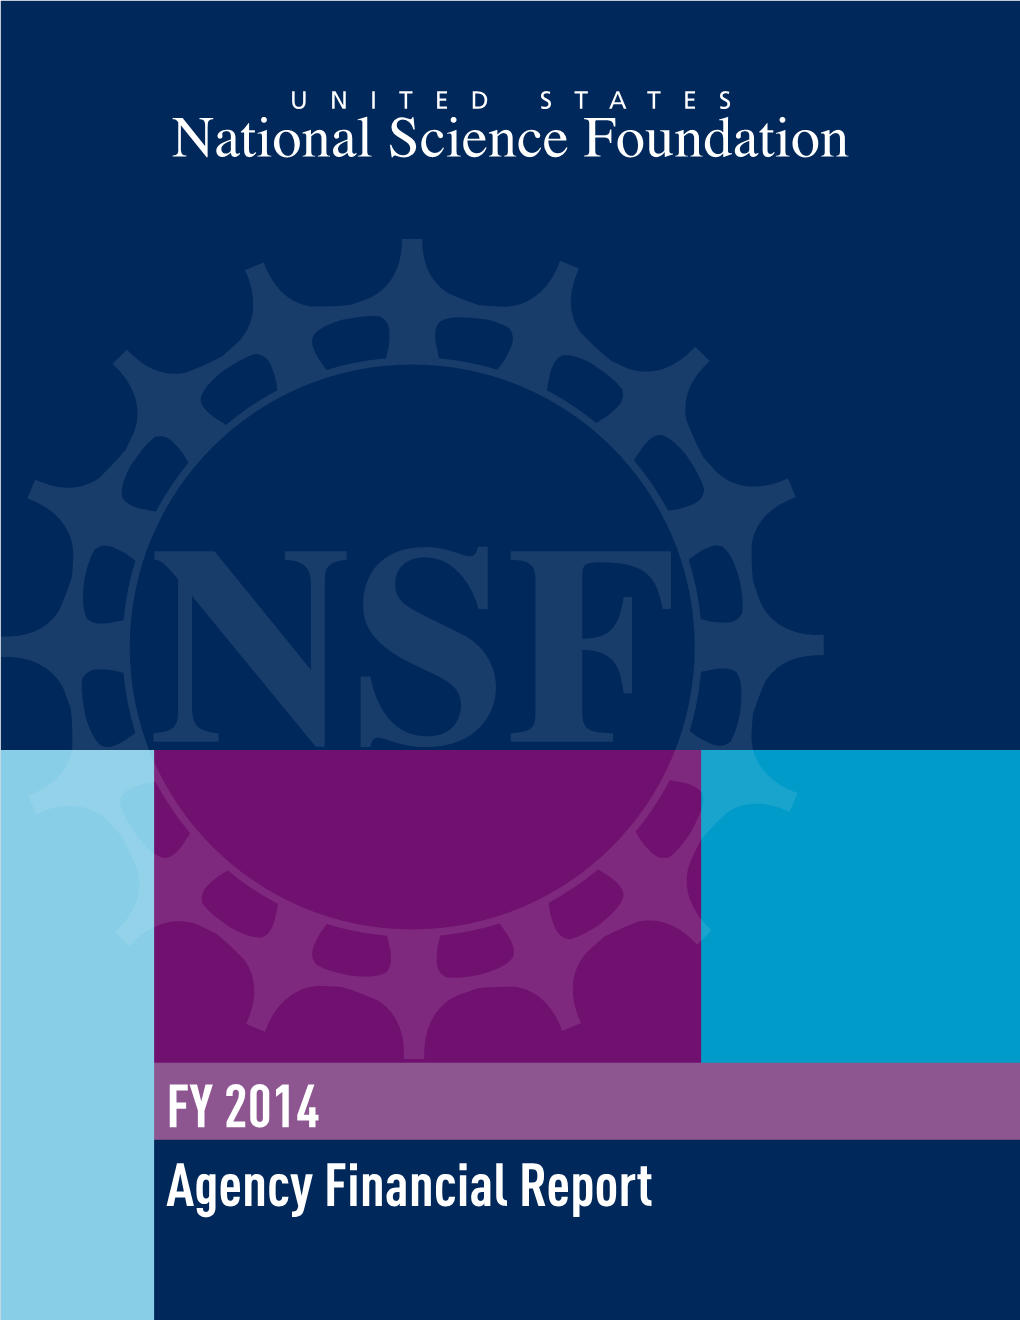 Agency Financial Report FY 2014